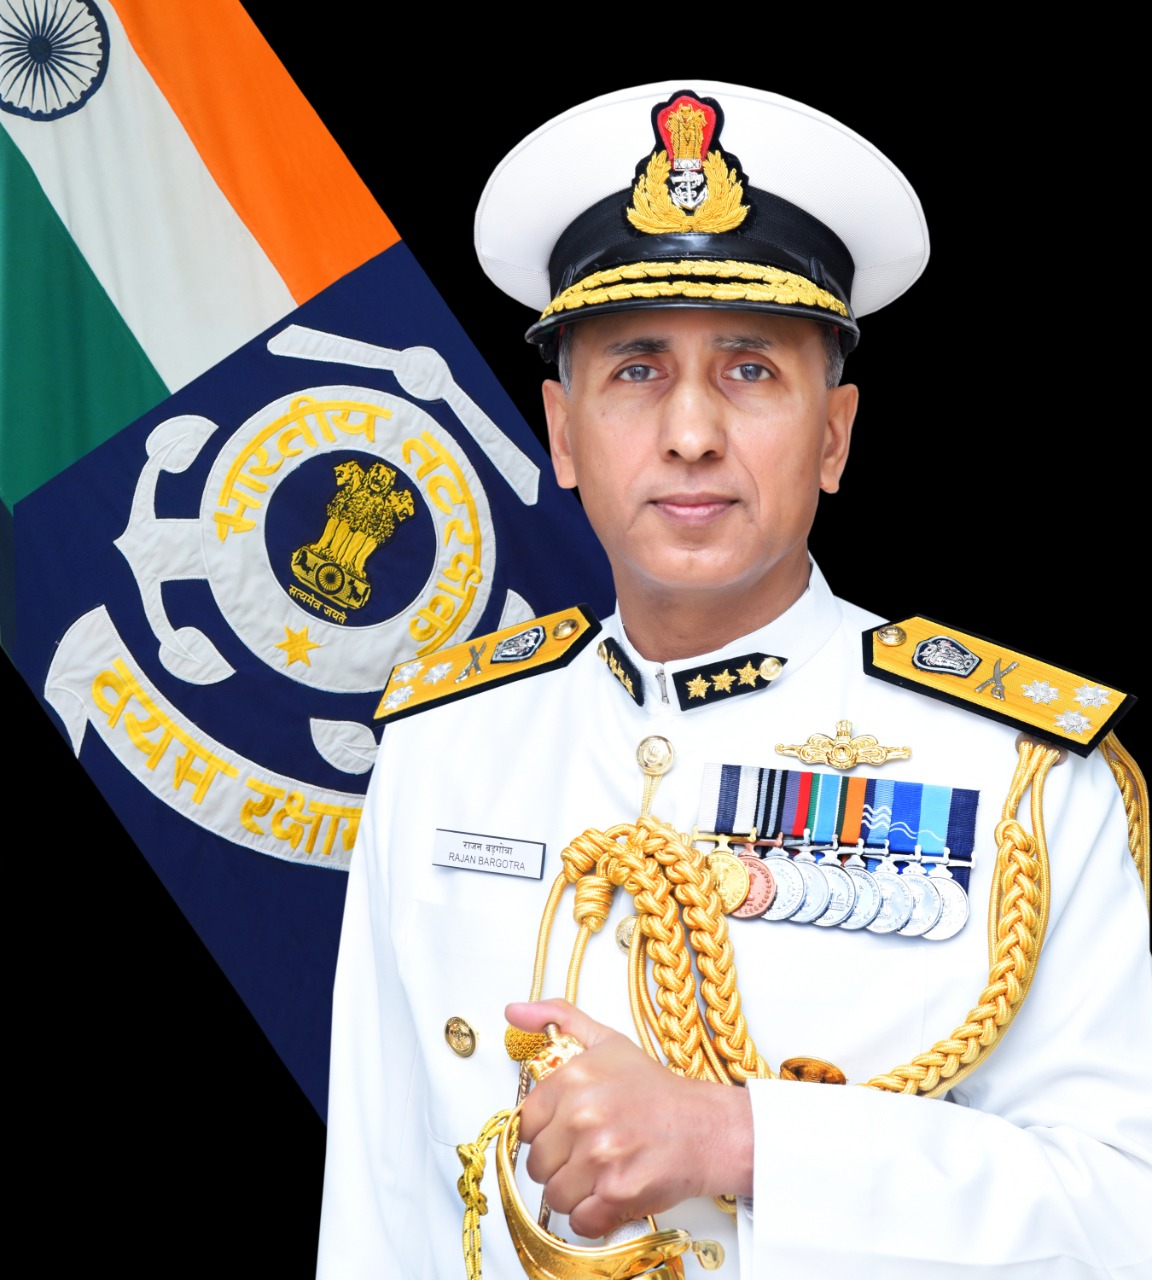 ADG Rajan Bargotra coast guard commander of Western seaboard visits Gujarat